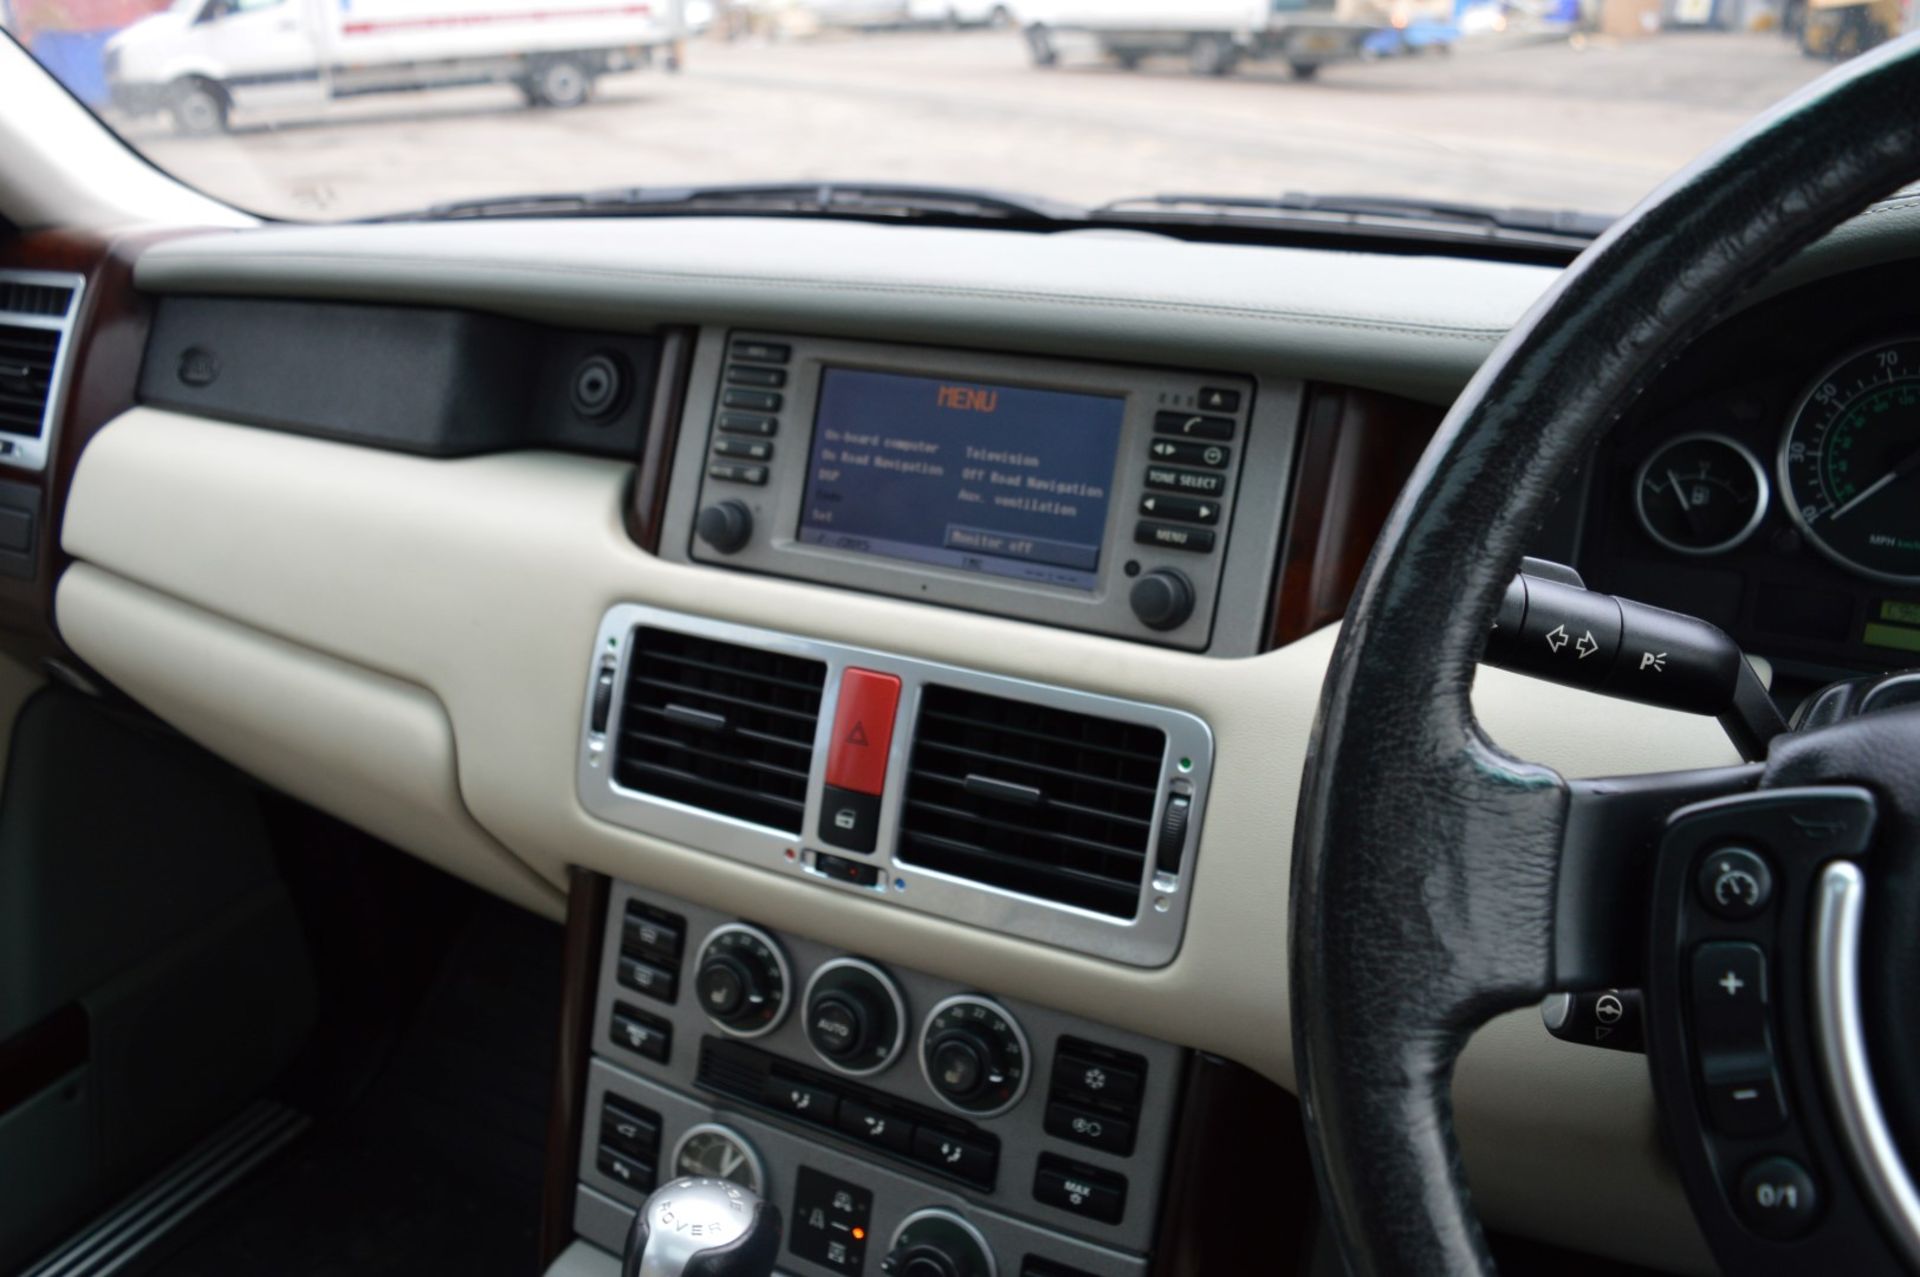 1 x Range Rover Vogue V8 4.4 Automatic - Black, Leather Interior, Petrol, Television, Premium - Image 40 of 63